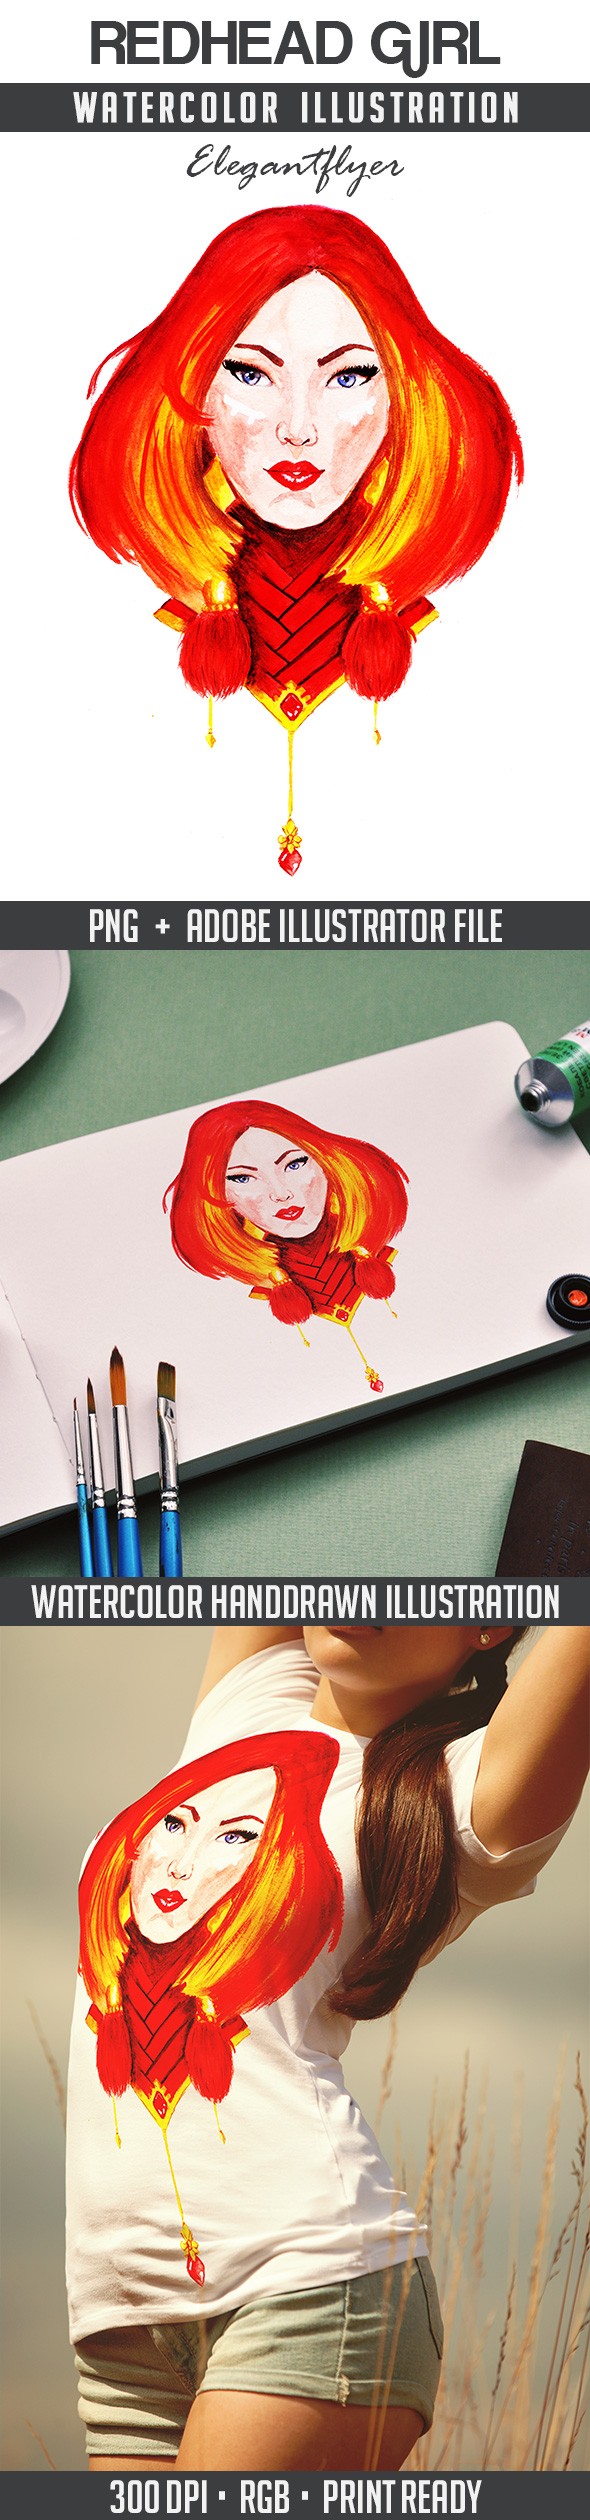 Redhead Girl by ElegantFlyer